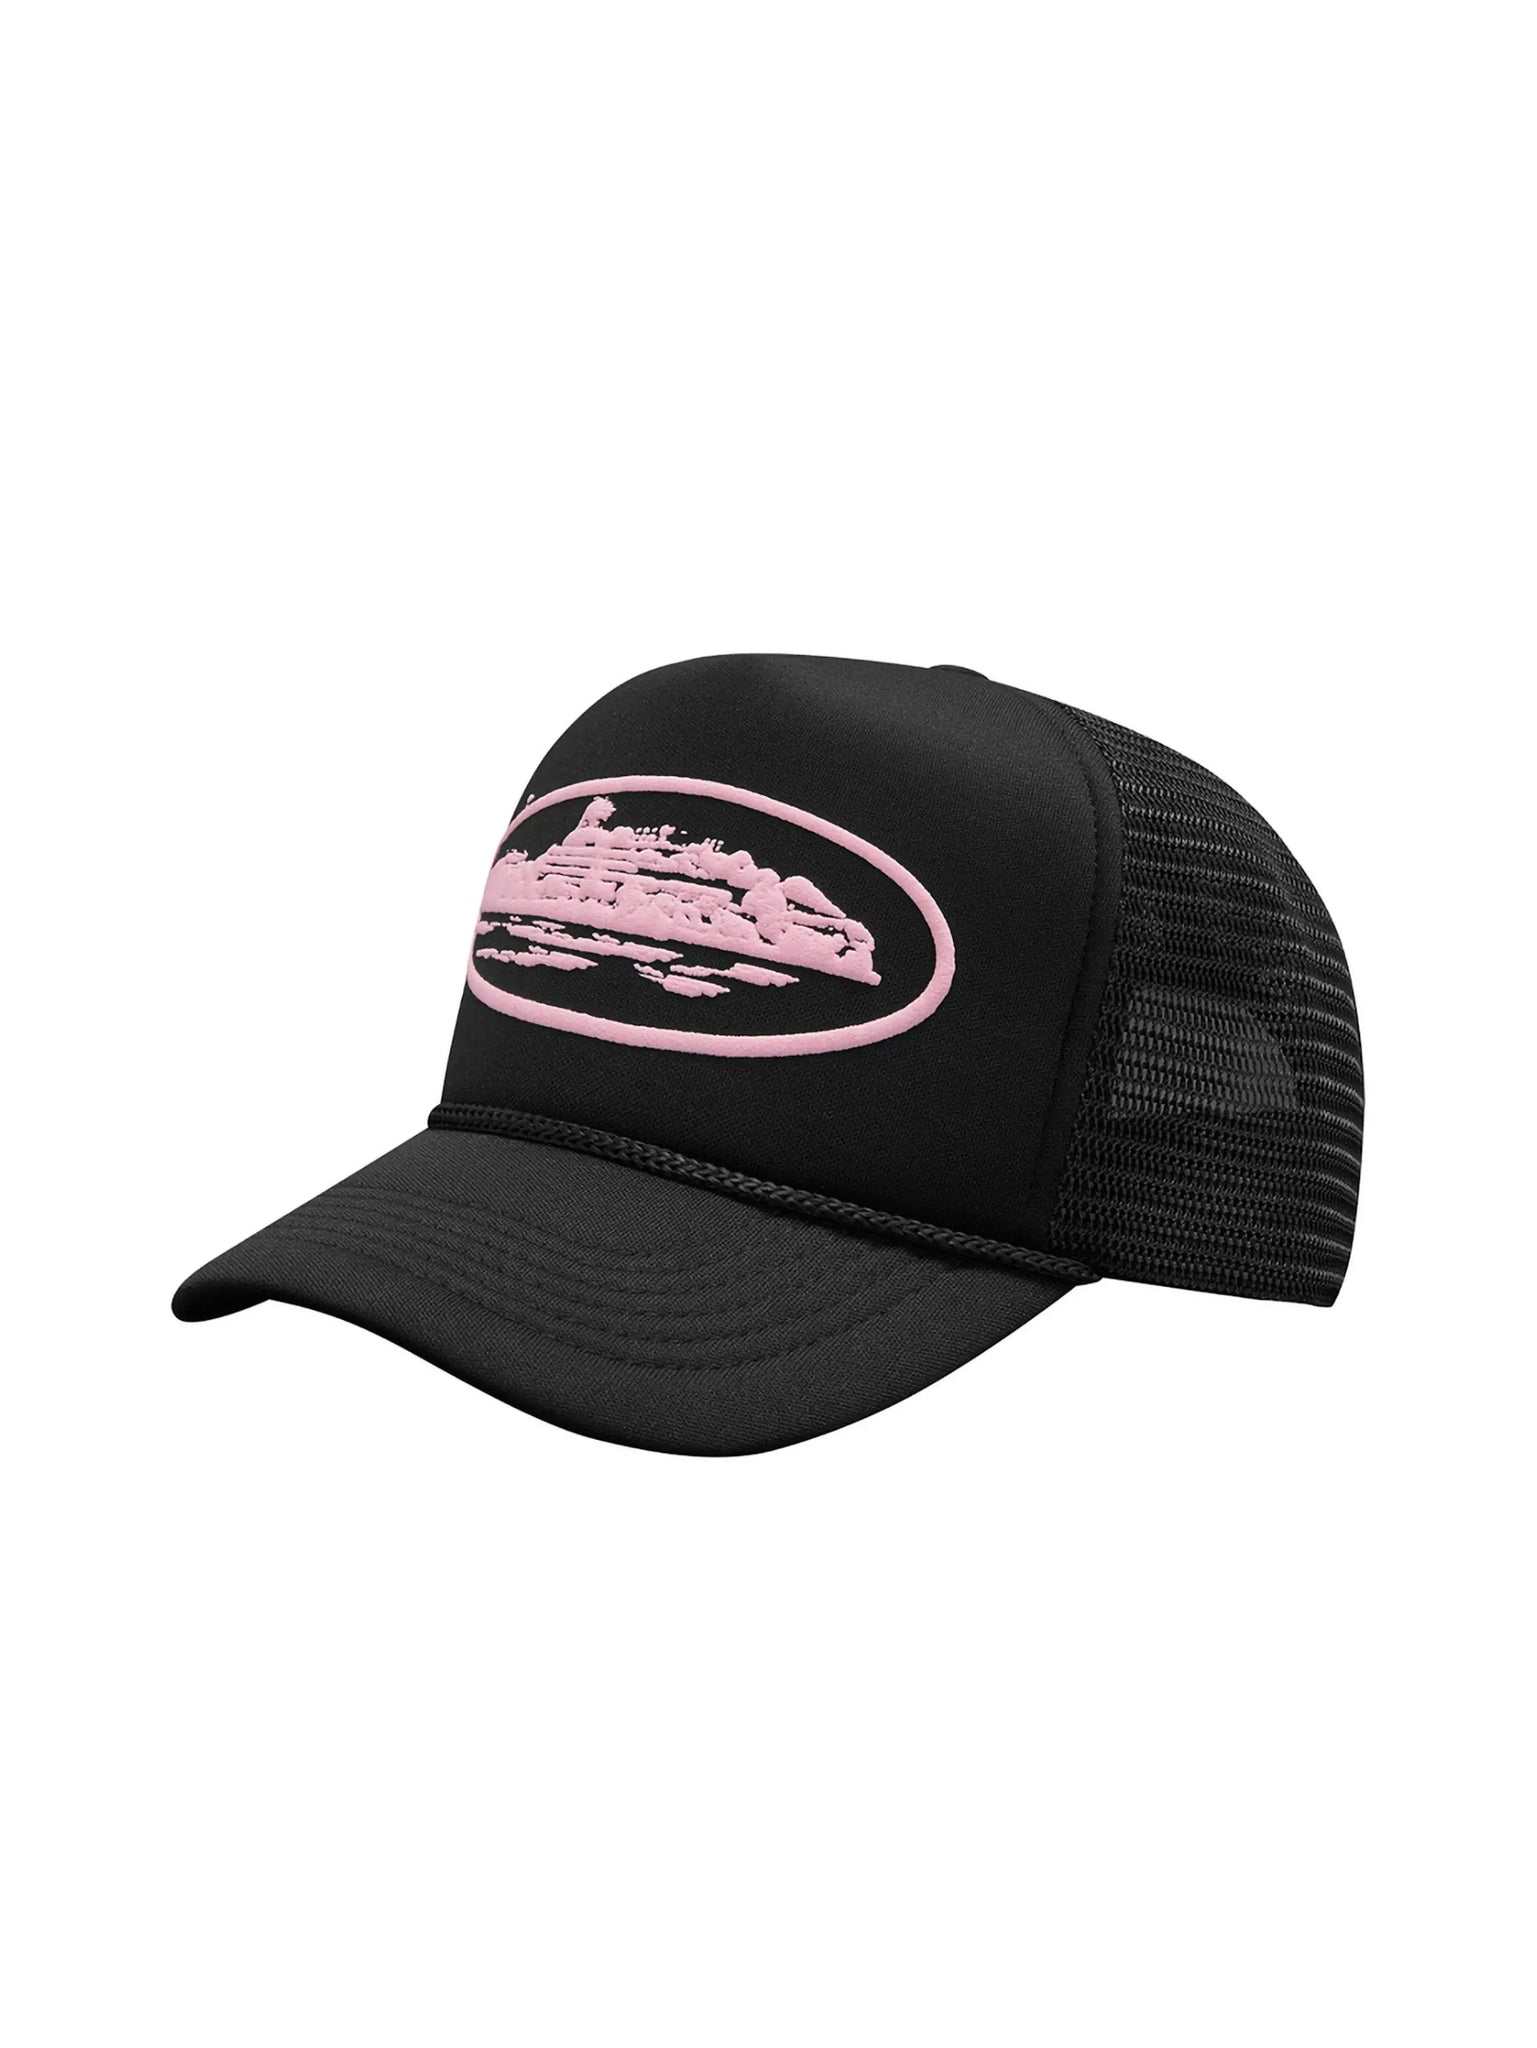 Corteiz Alcatraz Premium Trucker Hat Black/Pink in Auckland, New Zealand - Shop name